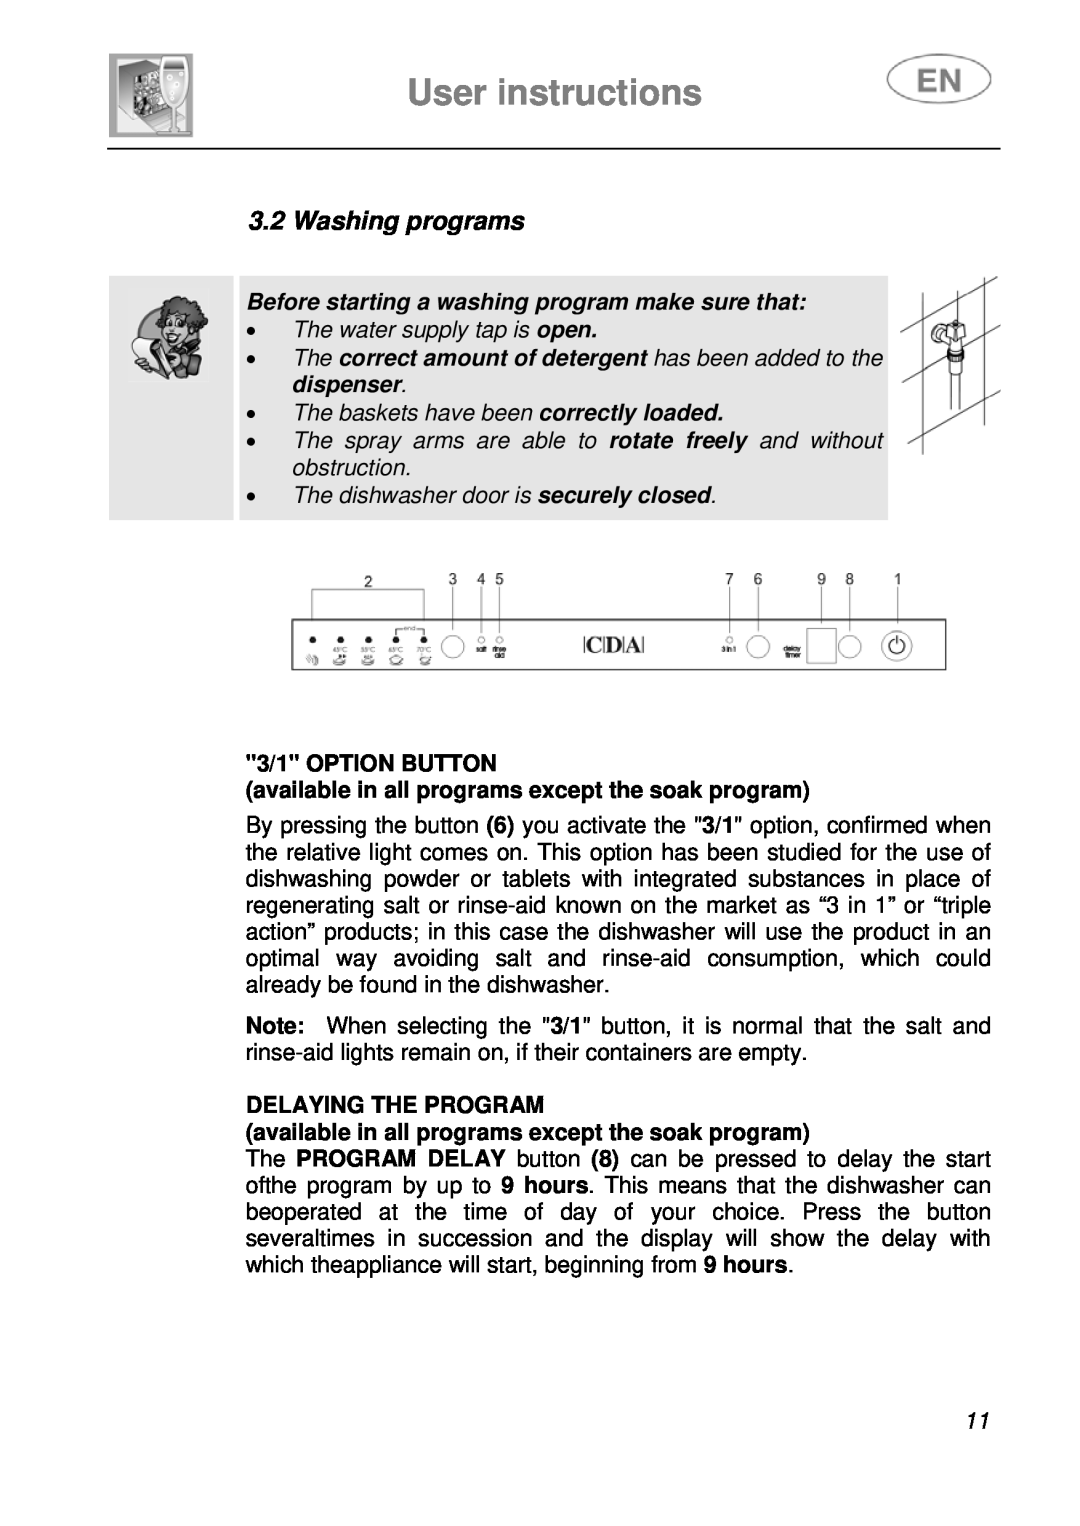 CDA WC460 manual User instructions, Washing programs, Before starting a washing program make sure that, 3/1 OPTION BUTTON 